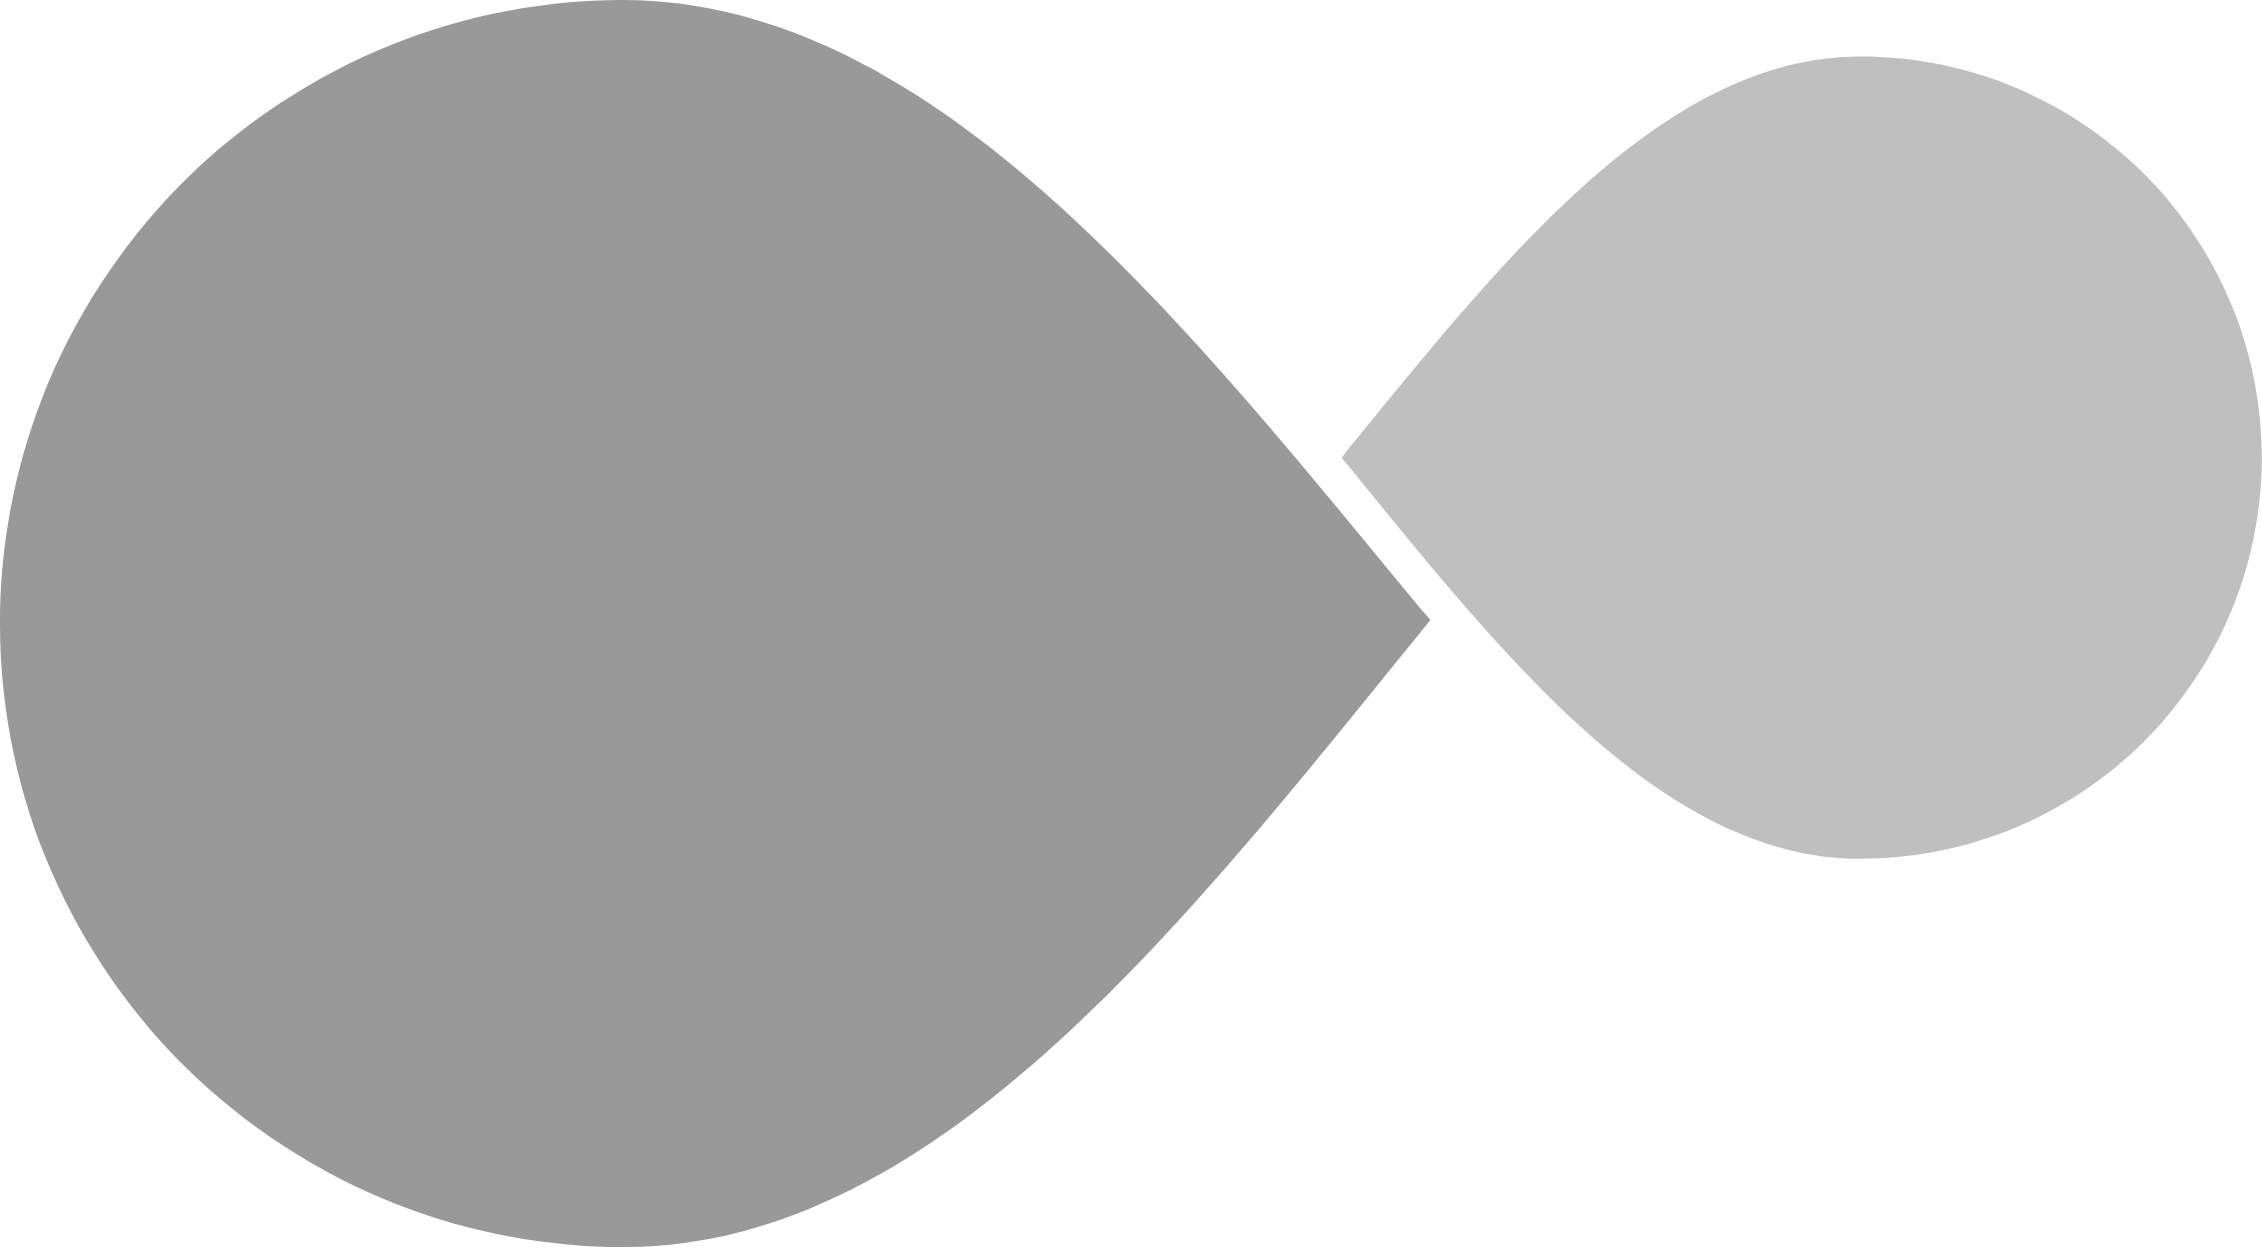 Caeli logo overlay